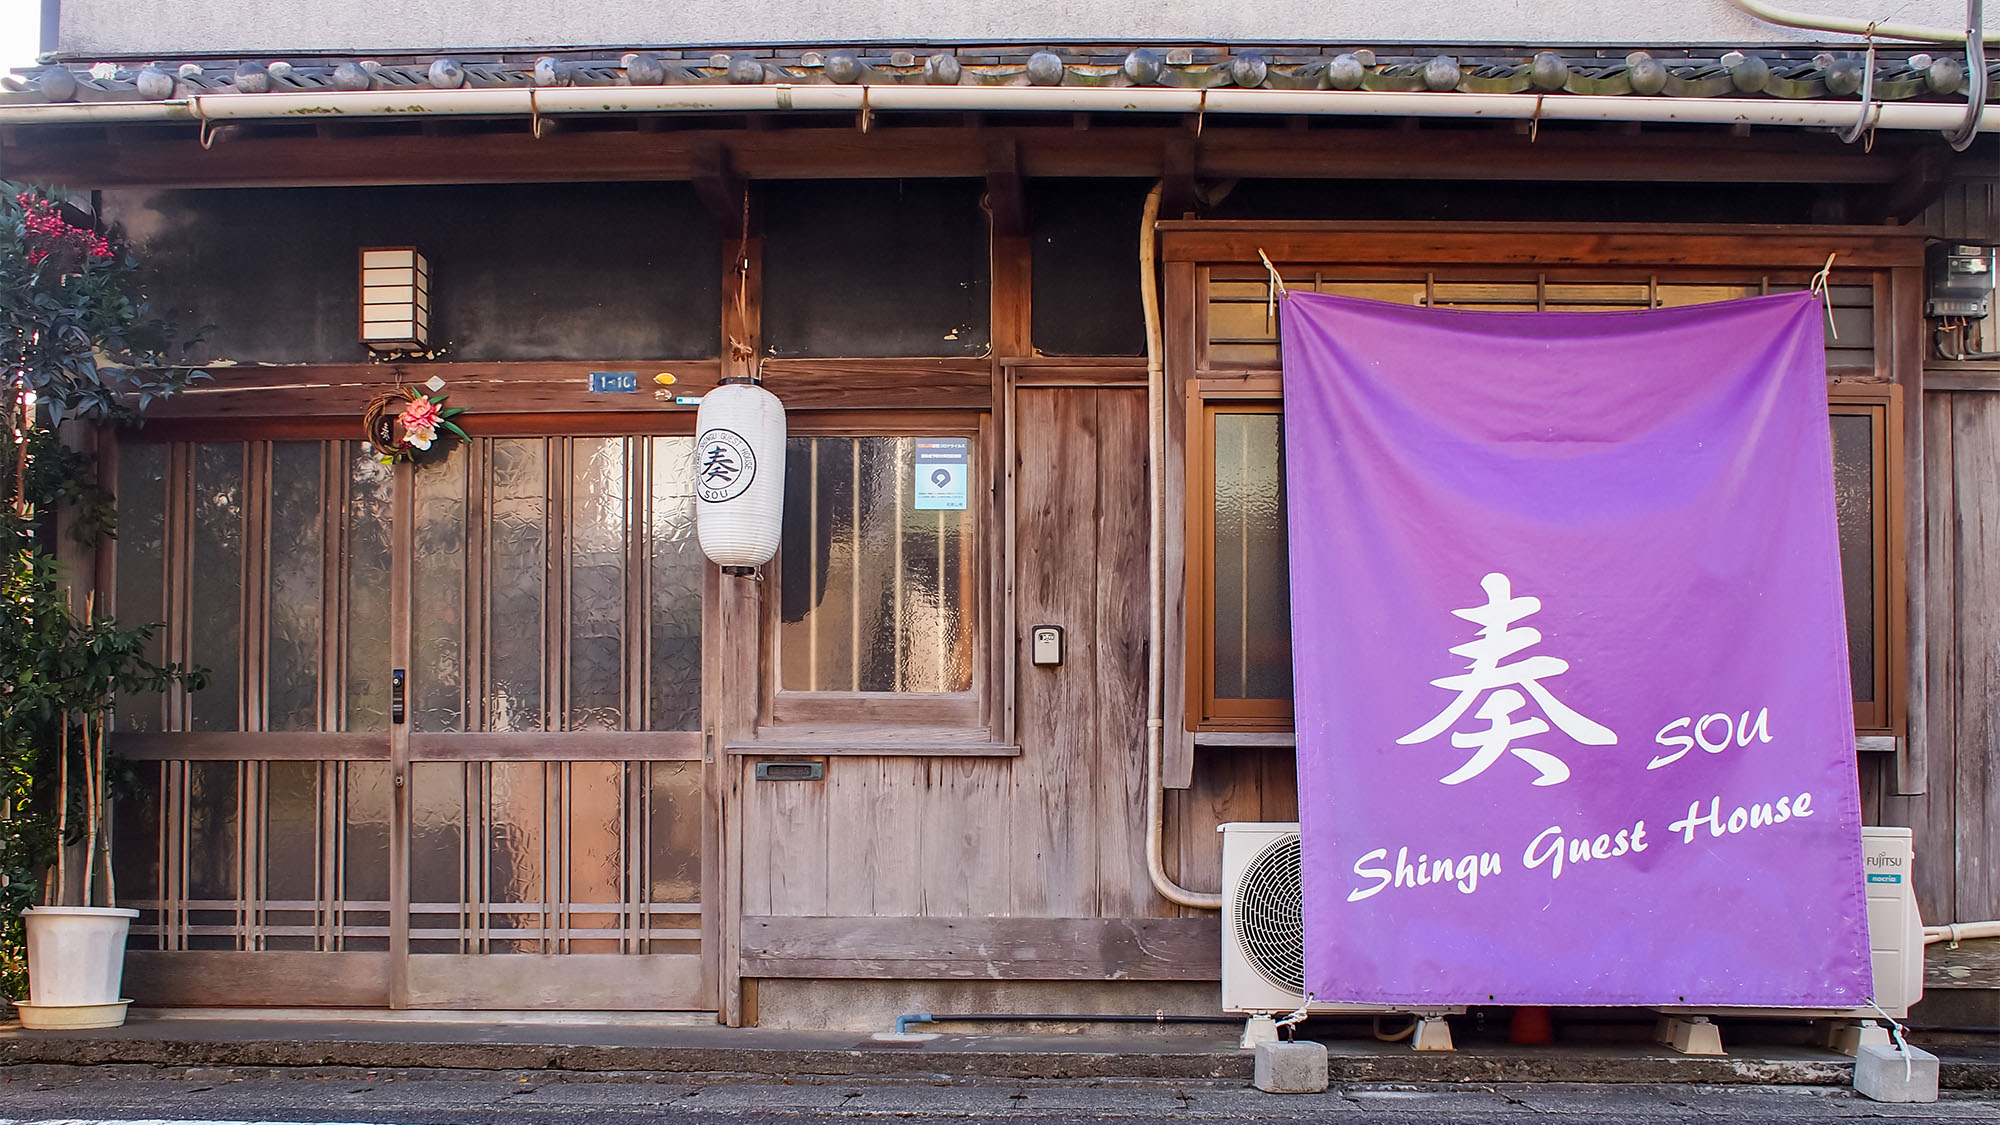 Shingu Guest House 소우